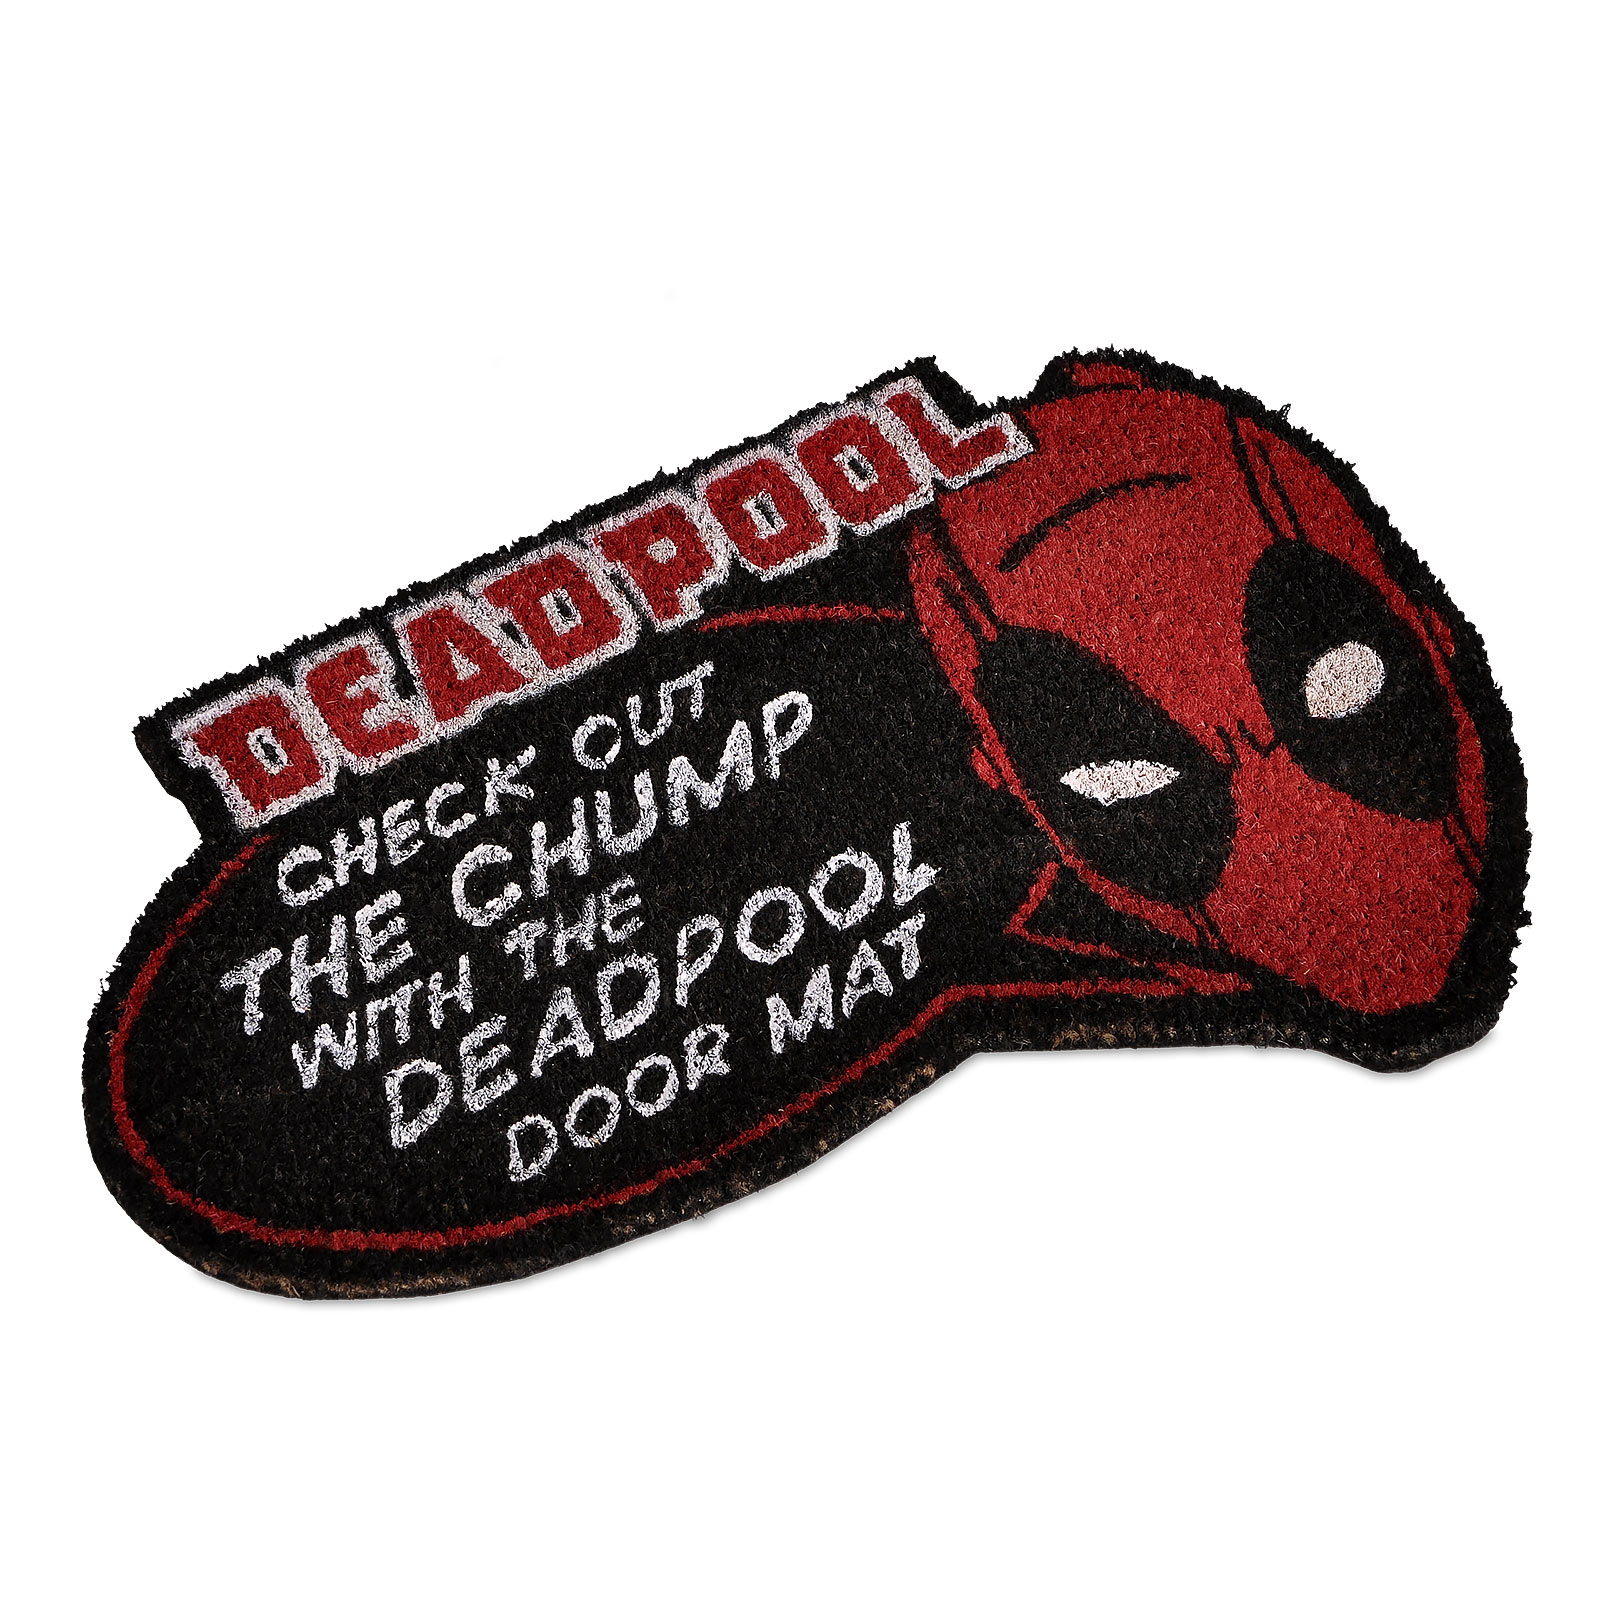 Deadpool - Check out Doormat